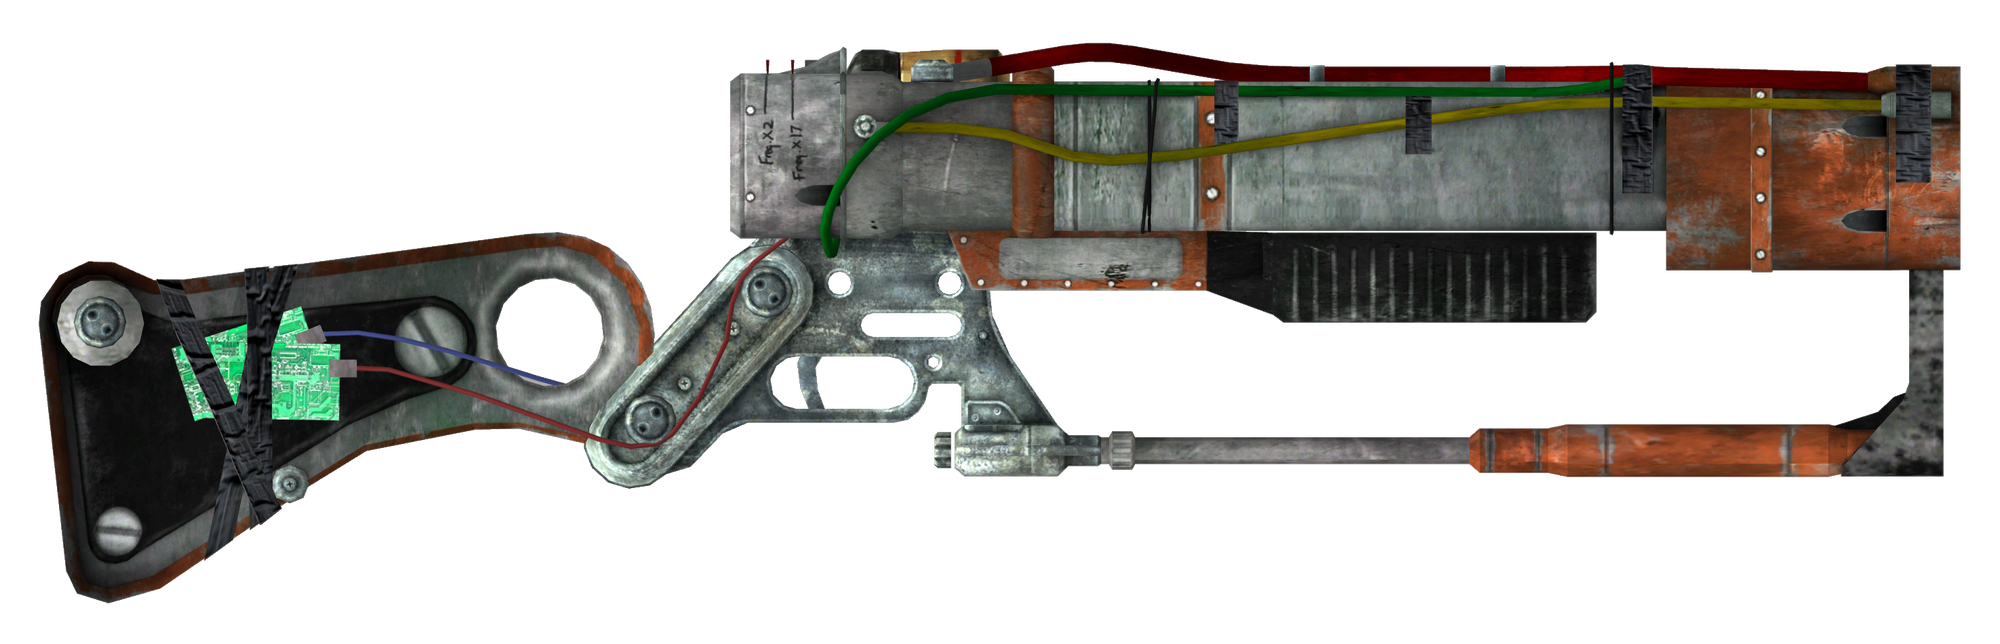 AER14 prototype | Fallout Wiki | Fandom